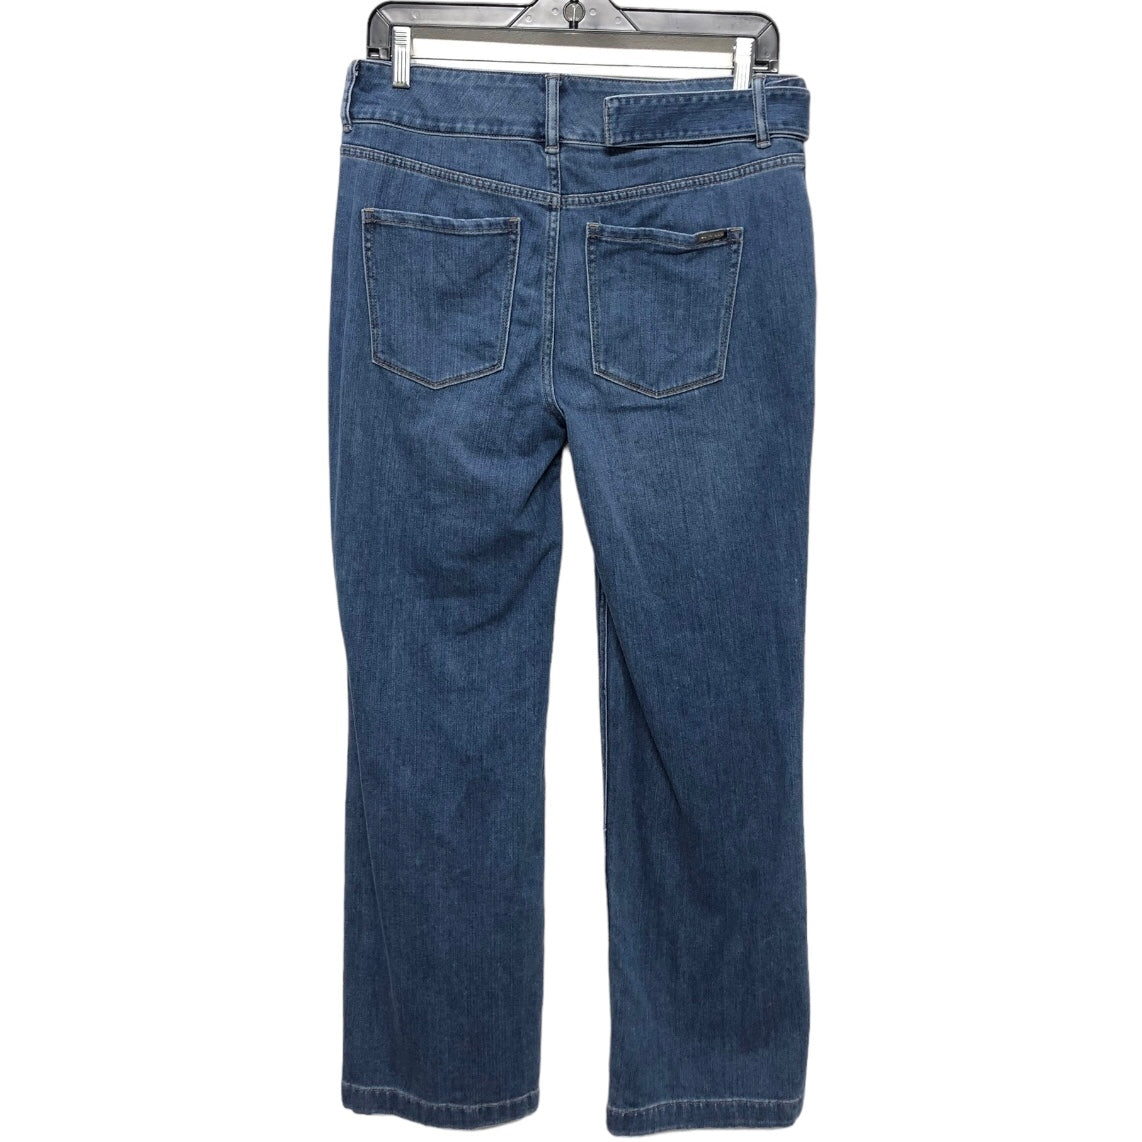 Blue Denim Jeans Cropped White House Black Market, Size 6long